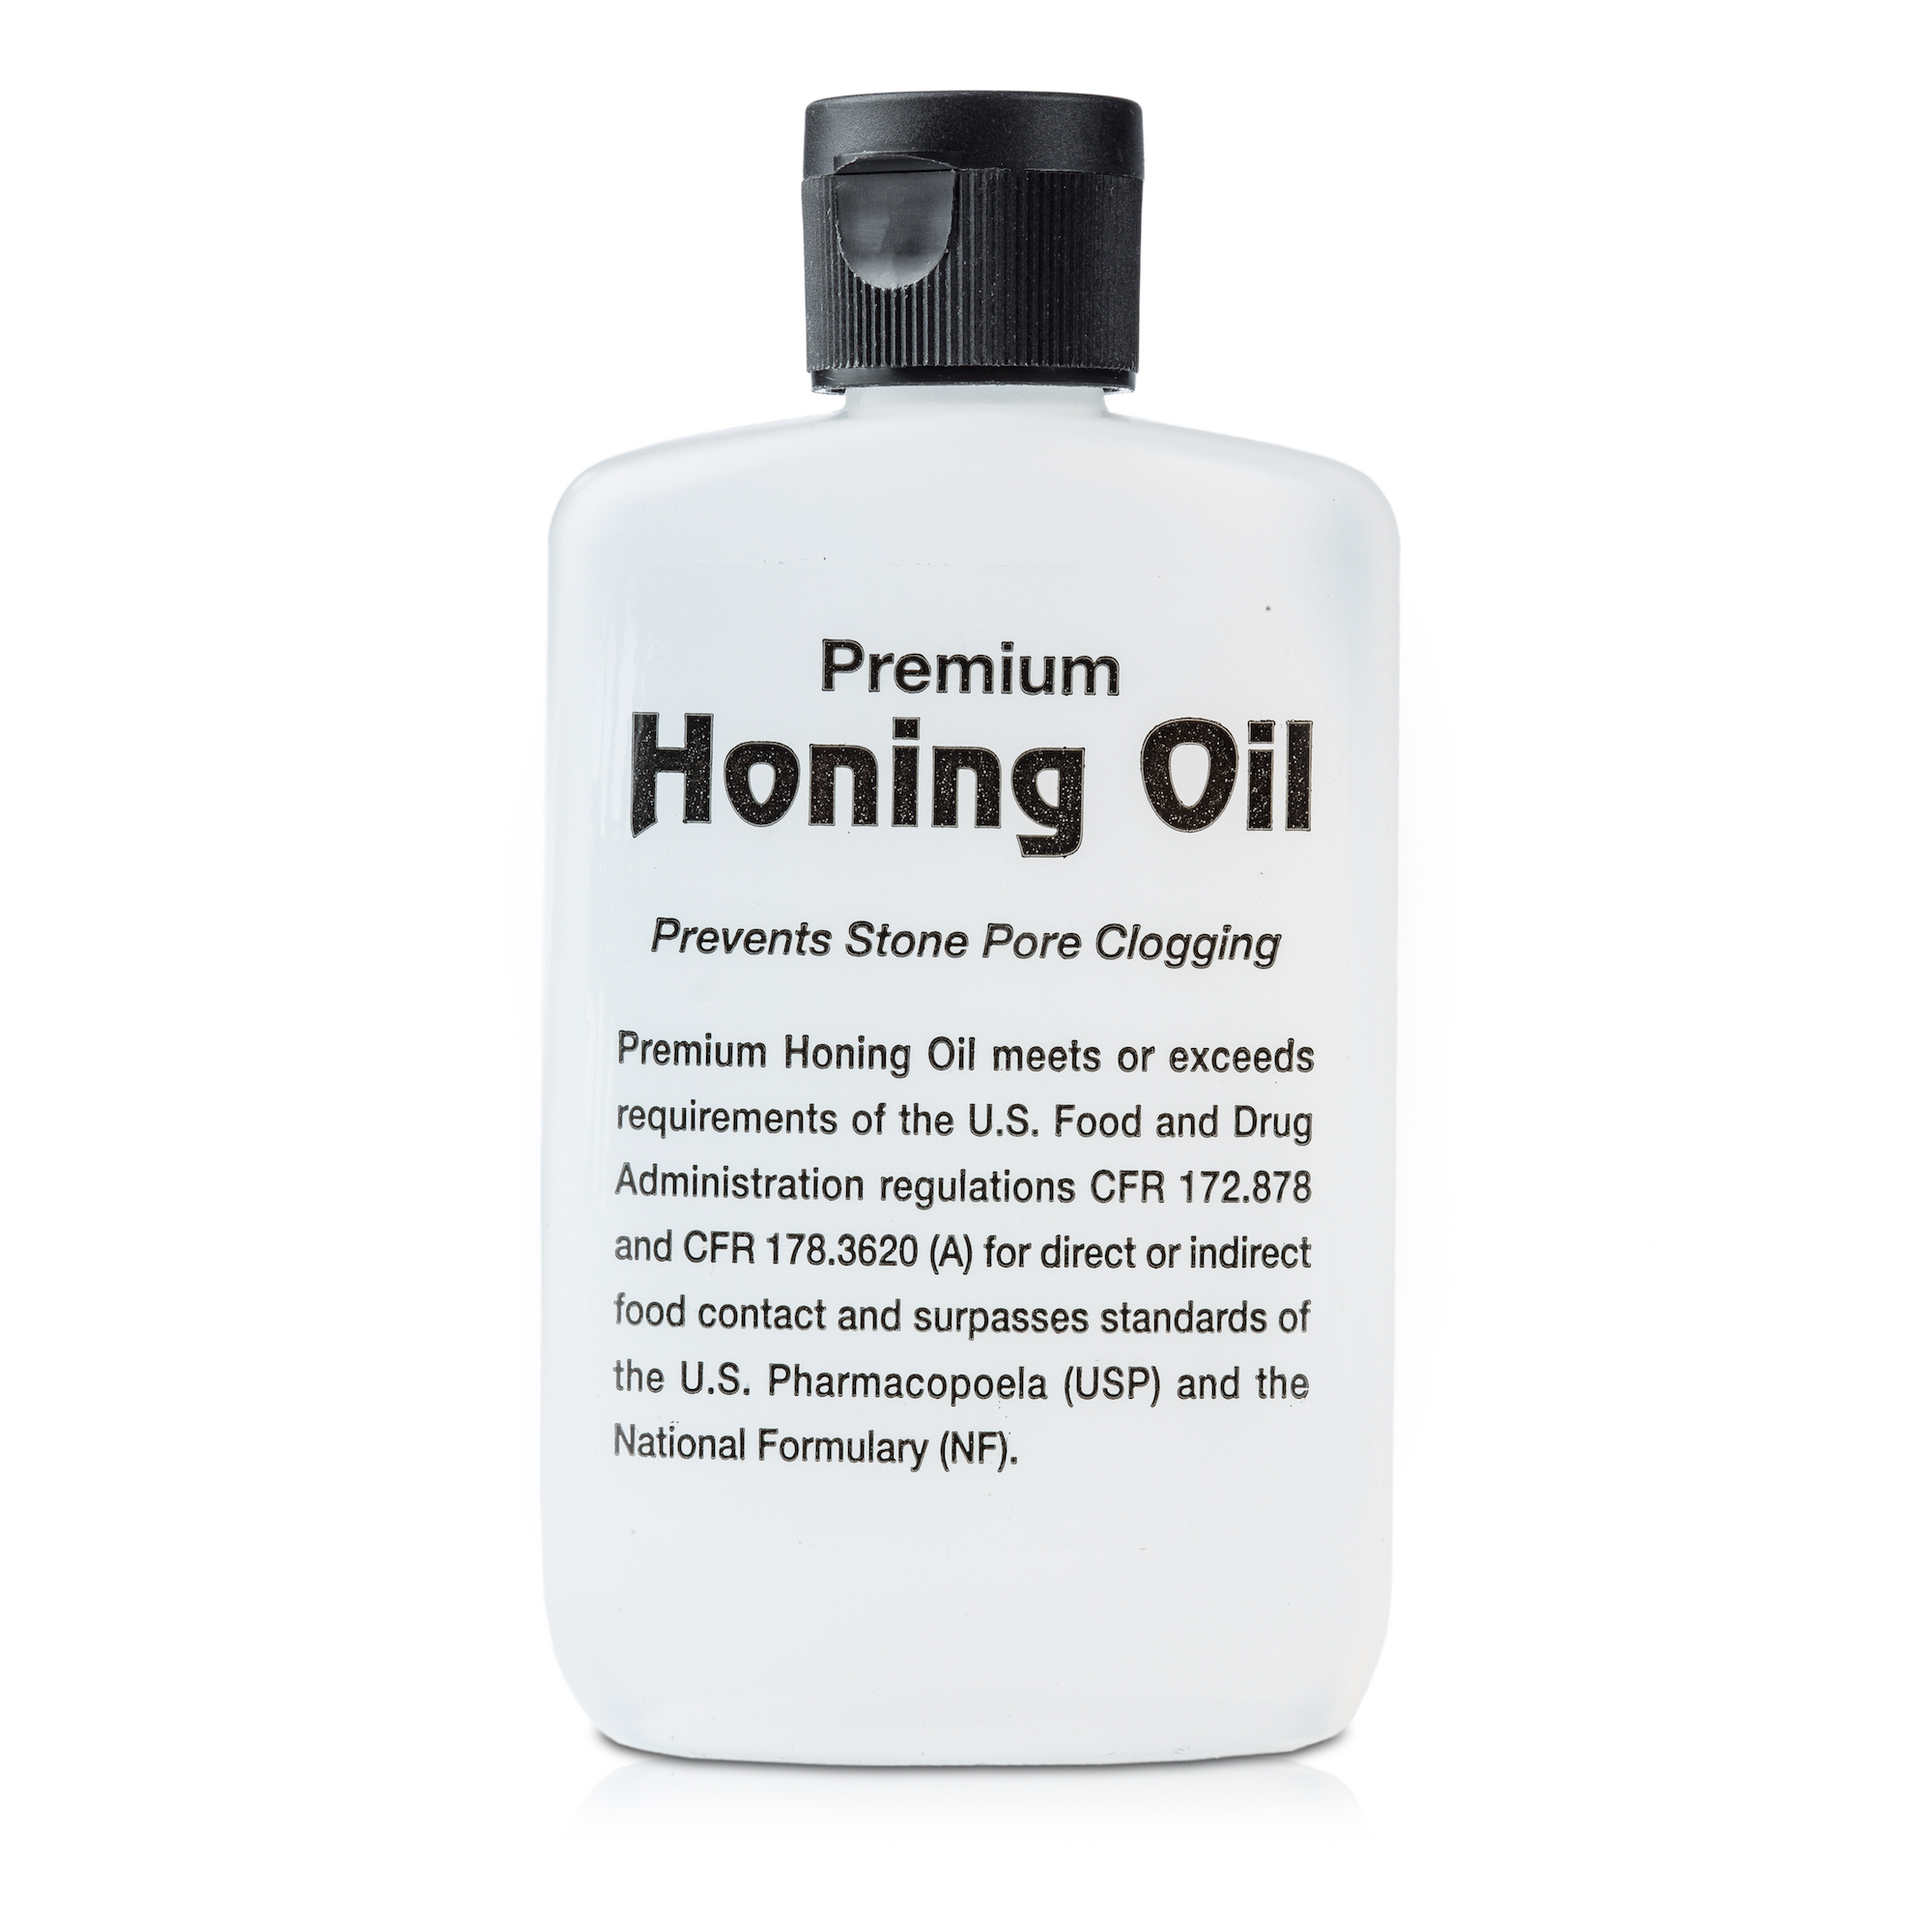 RH Preyda Adult Honing Oil Premium oz, Transparent, One size, 09RP017